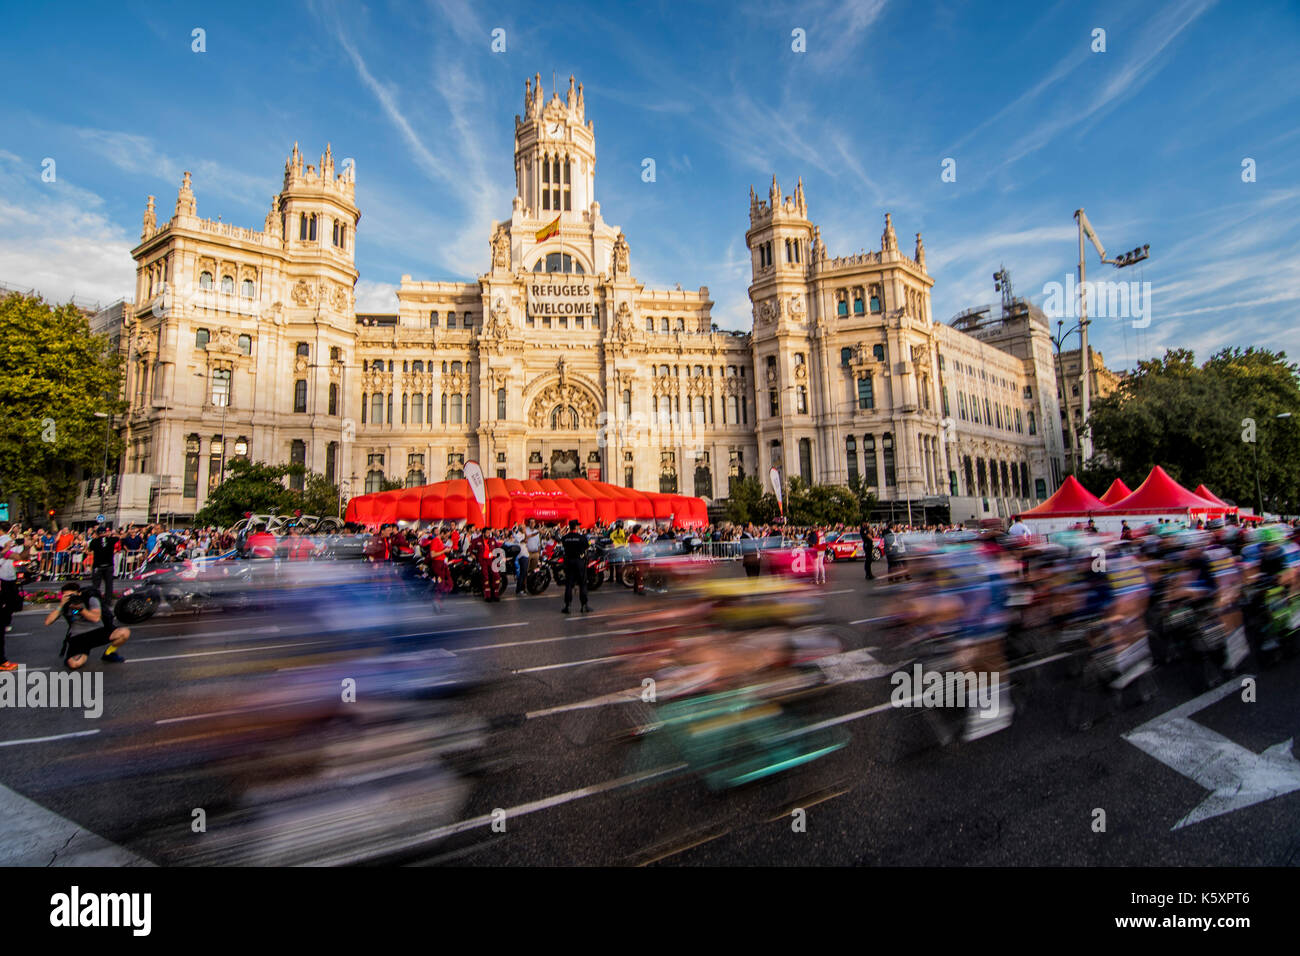 Madrid, Spain. 10th September, 2017. Peloton rides  during the stage 21 of Tour of Spain (Vuelta a España) between Madrid and Madrid on September 10, 2017 in Madrid, Spain. ©David Gato/Alamy Live News Stock Photo